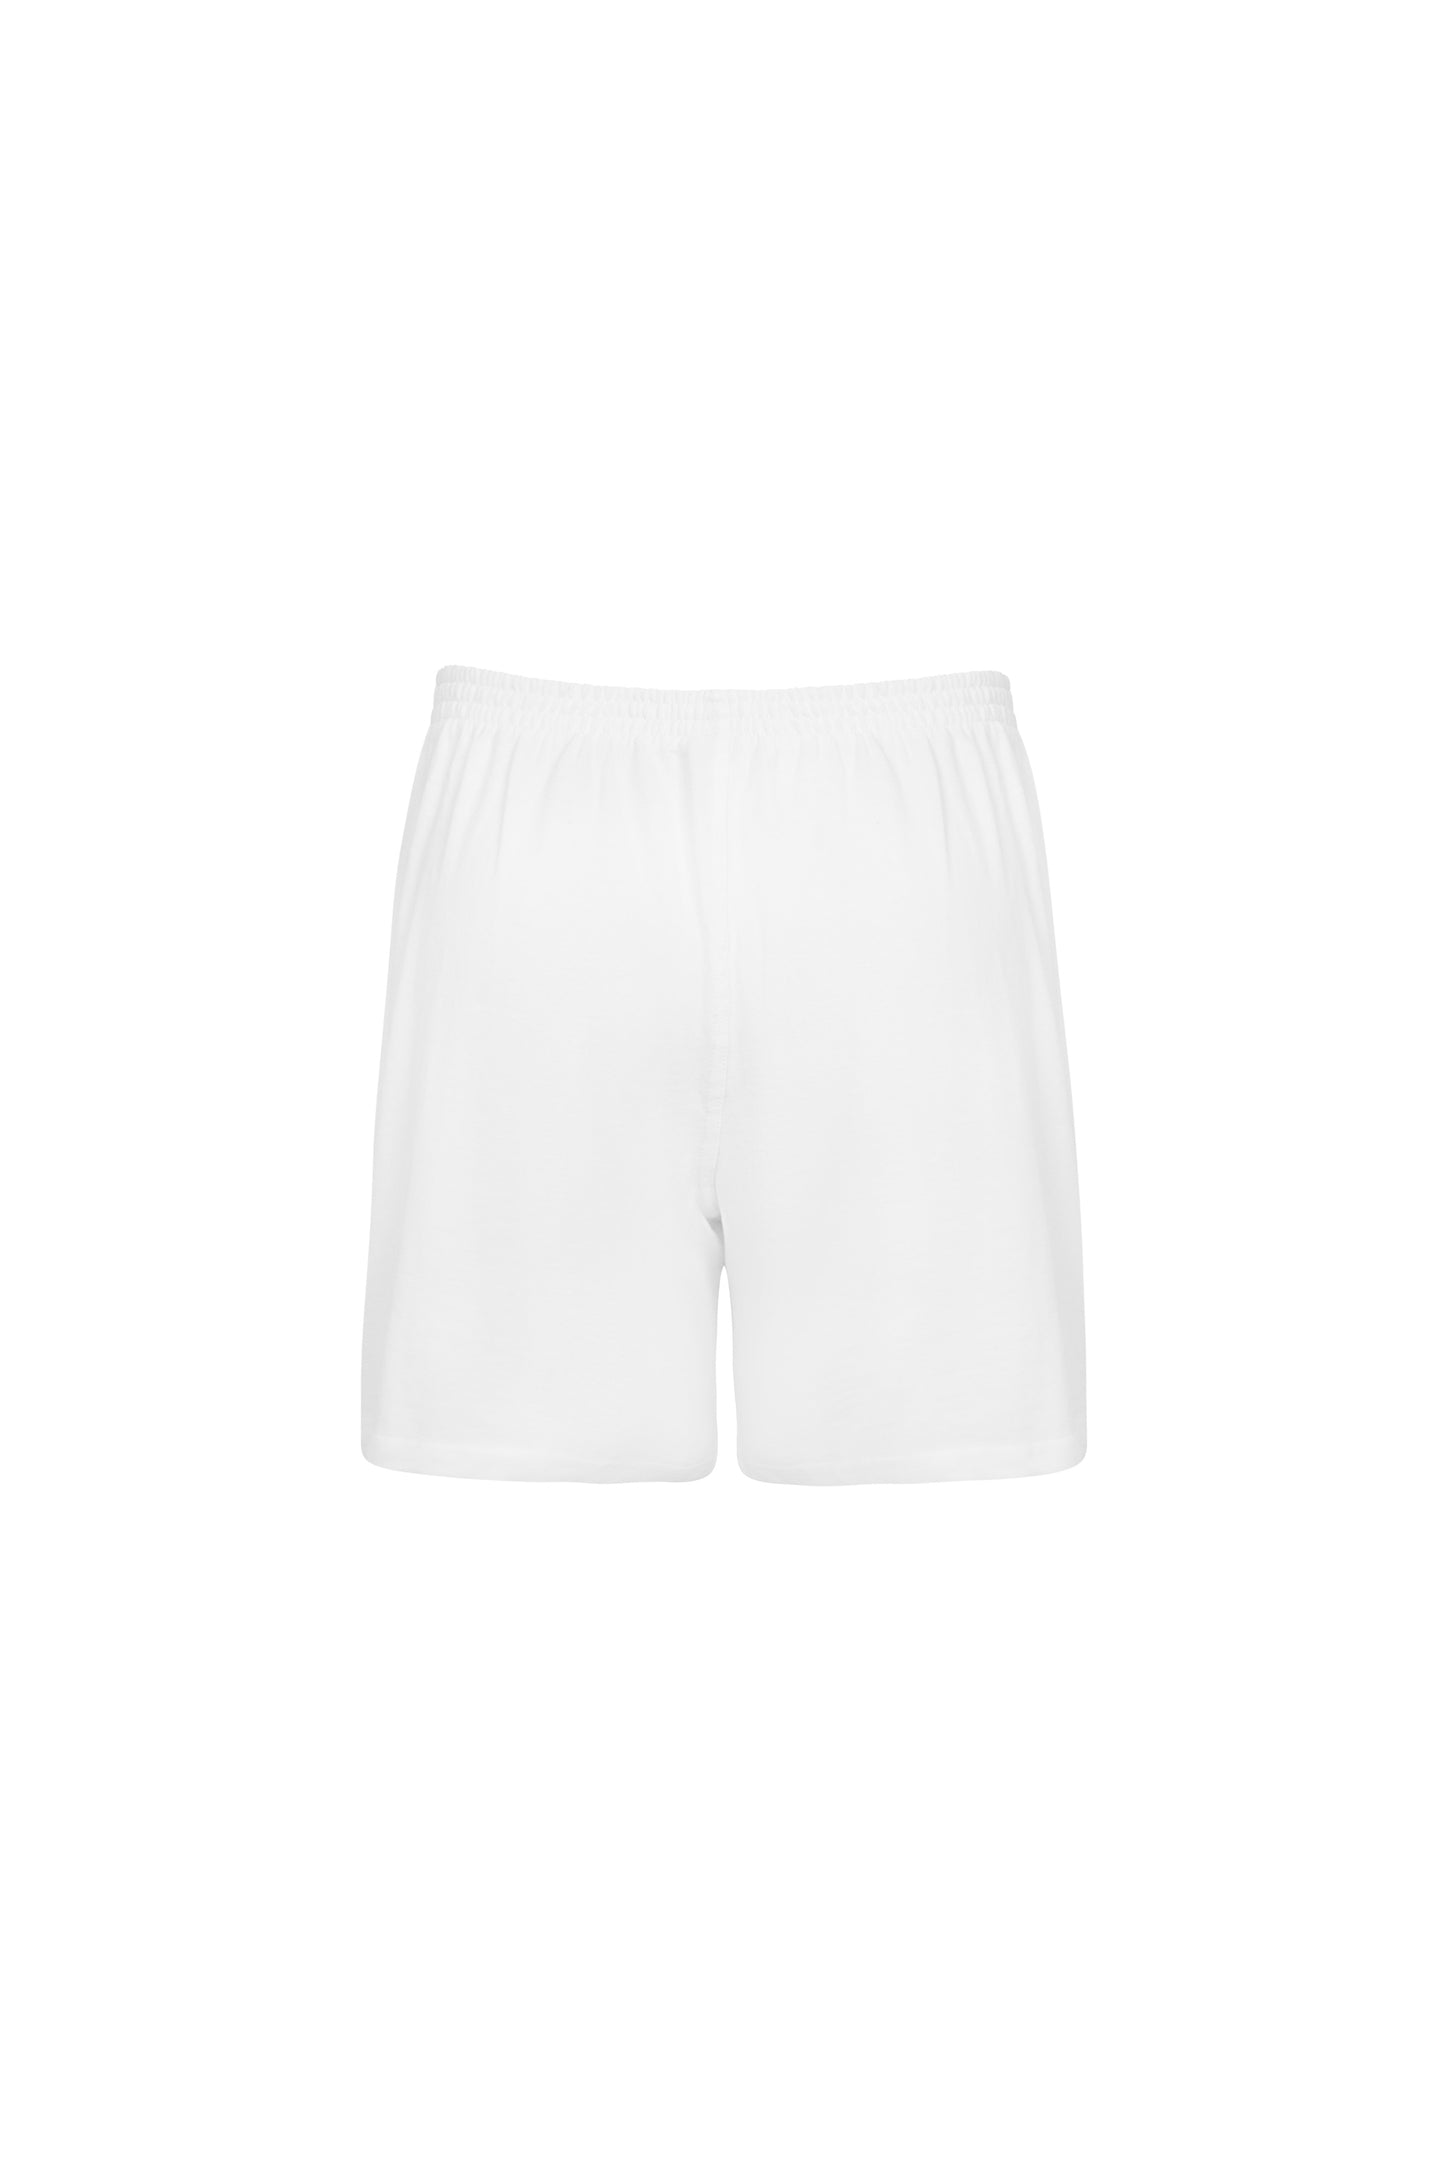 Ladies Club Short- classic white- back